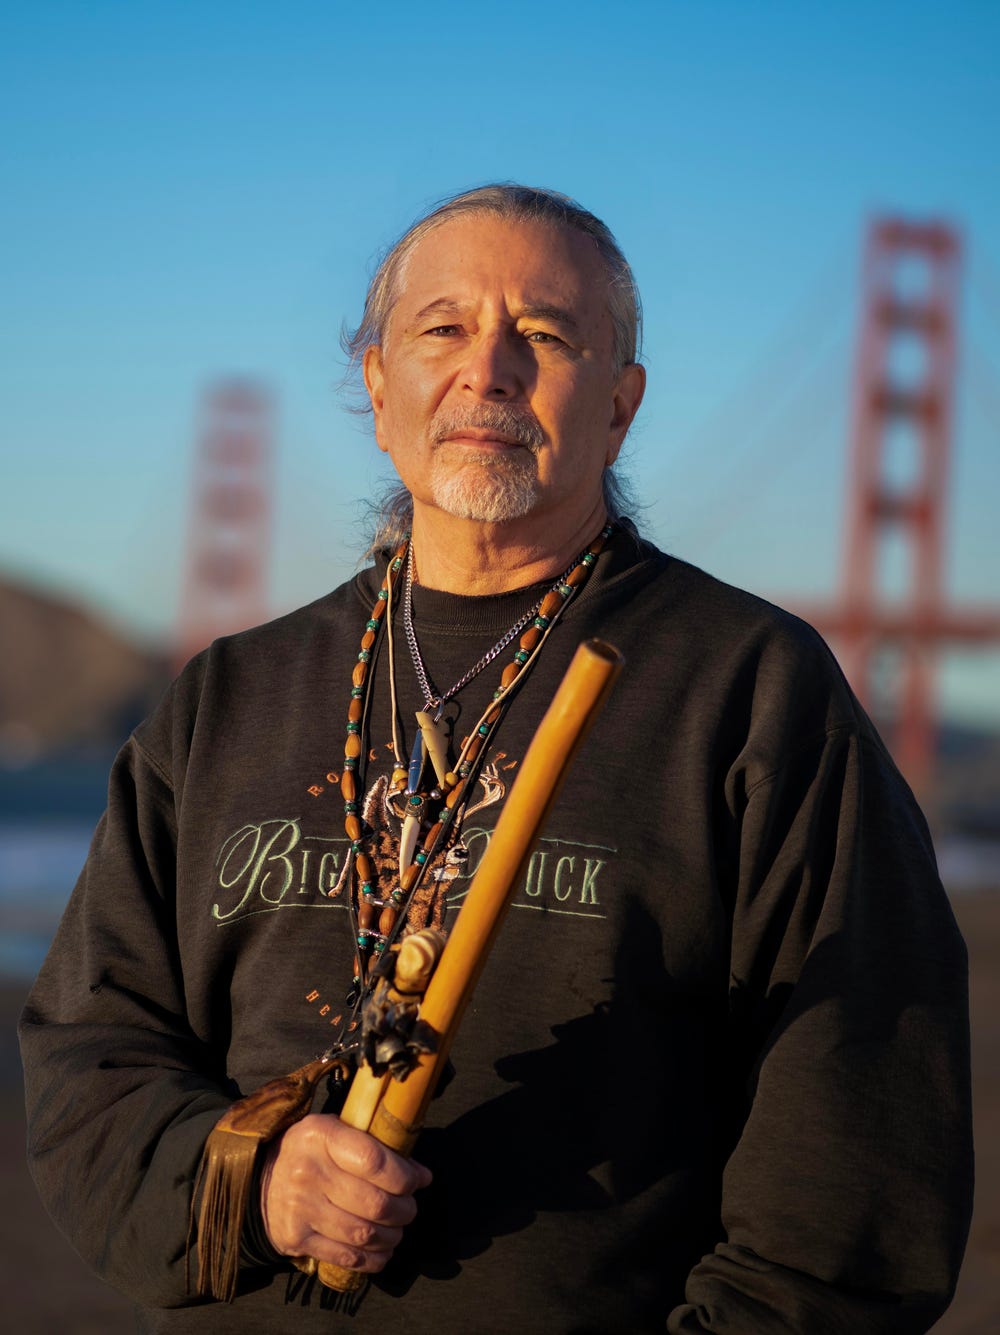 Gregg Castro standing in front of the Golden Gate Bridge